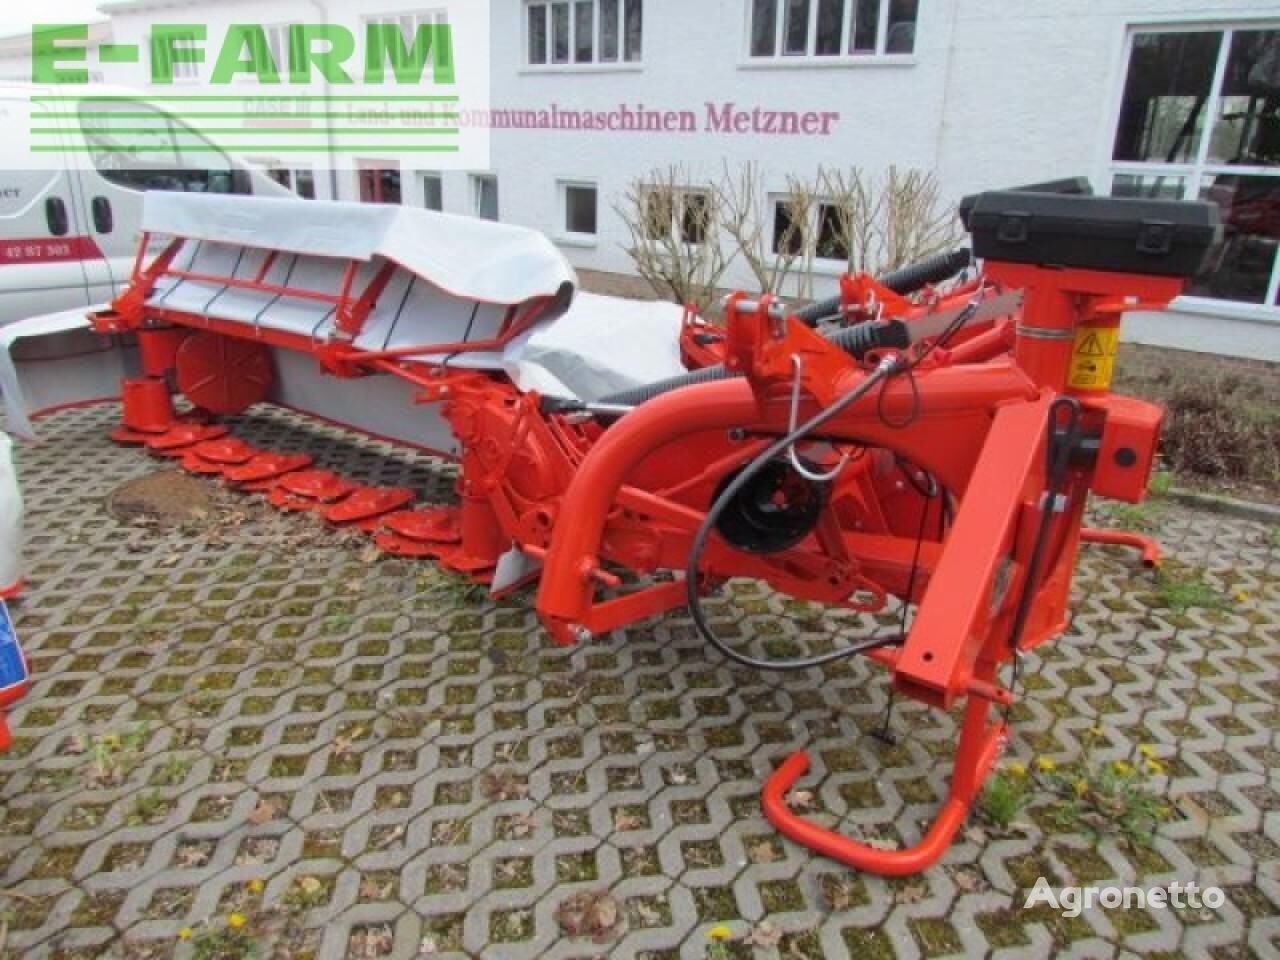 Kuhn gmd 315 ff rotary mower